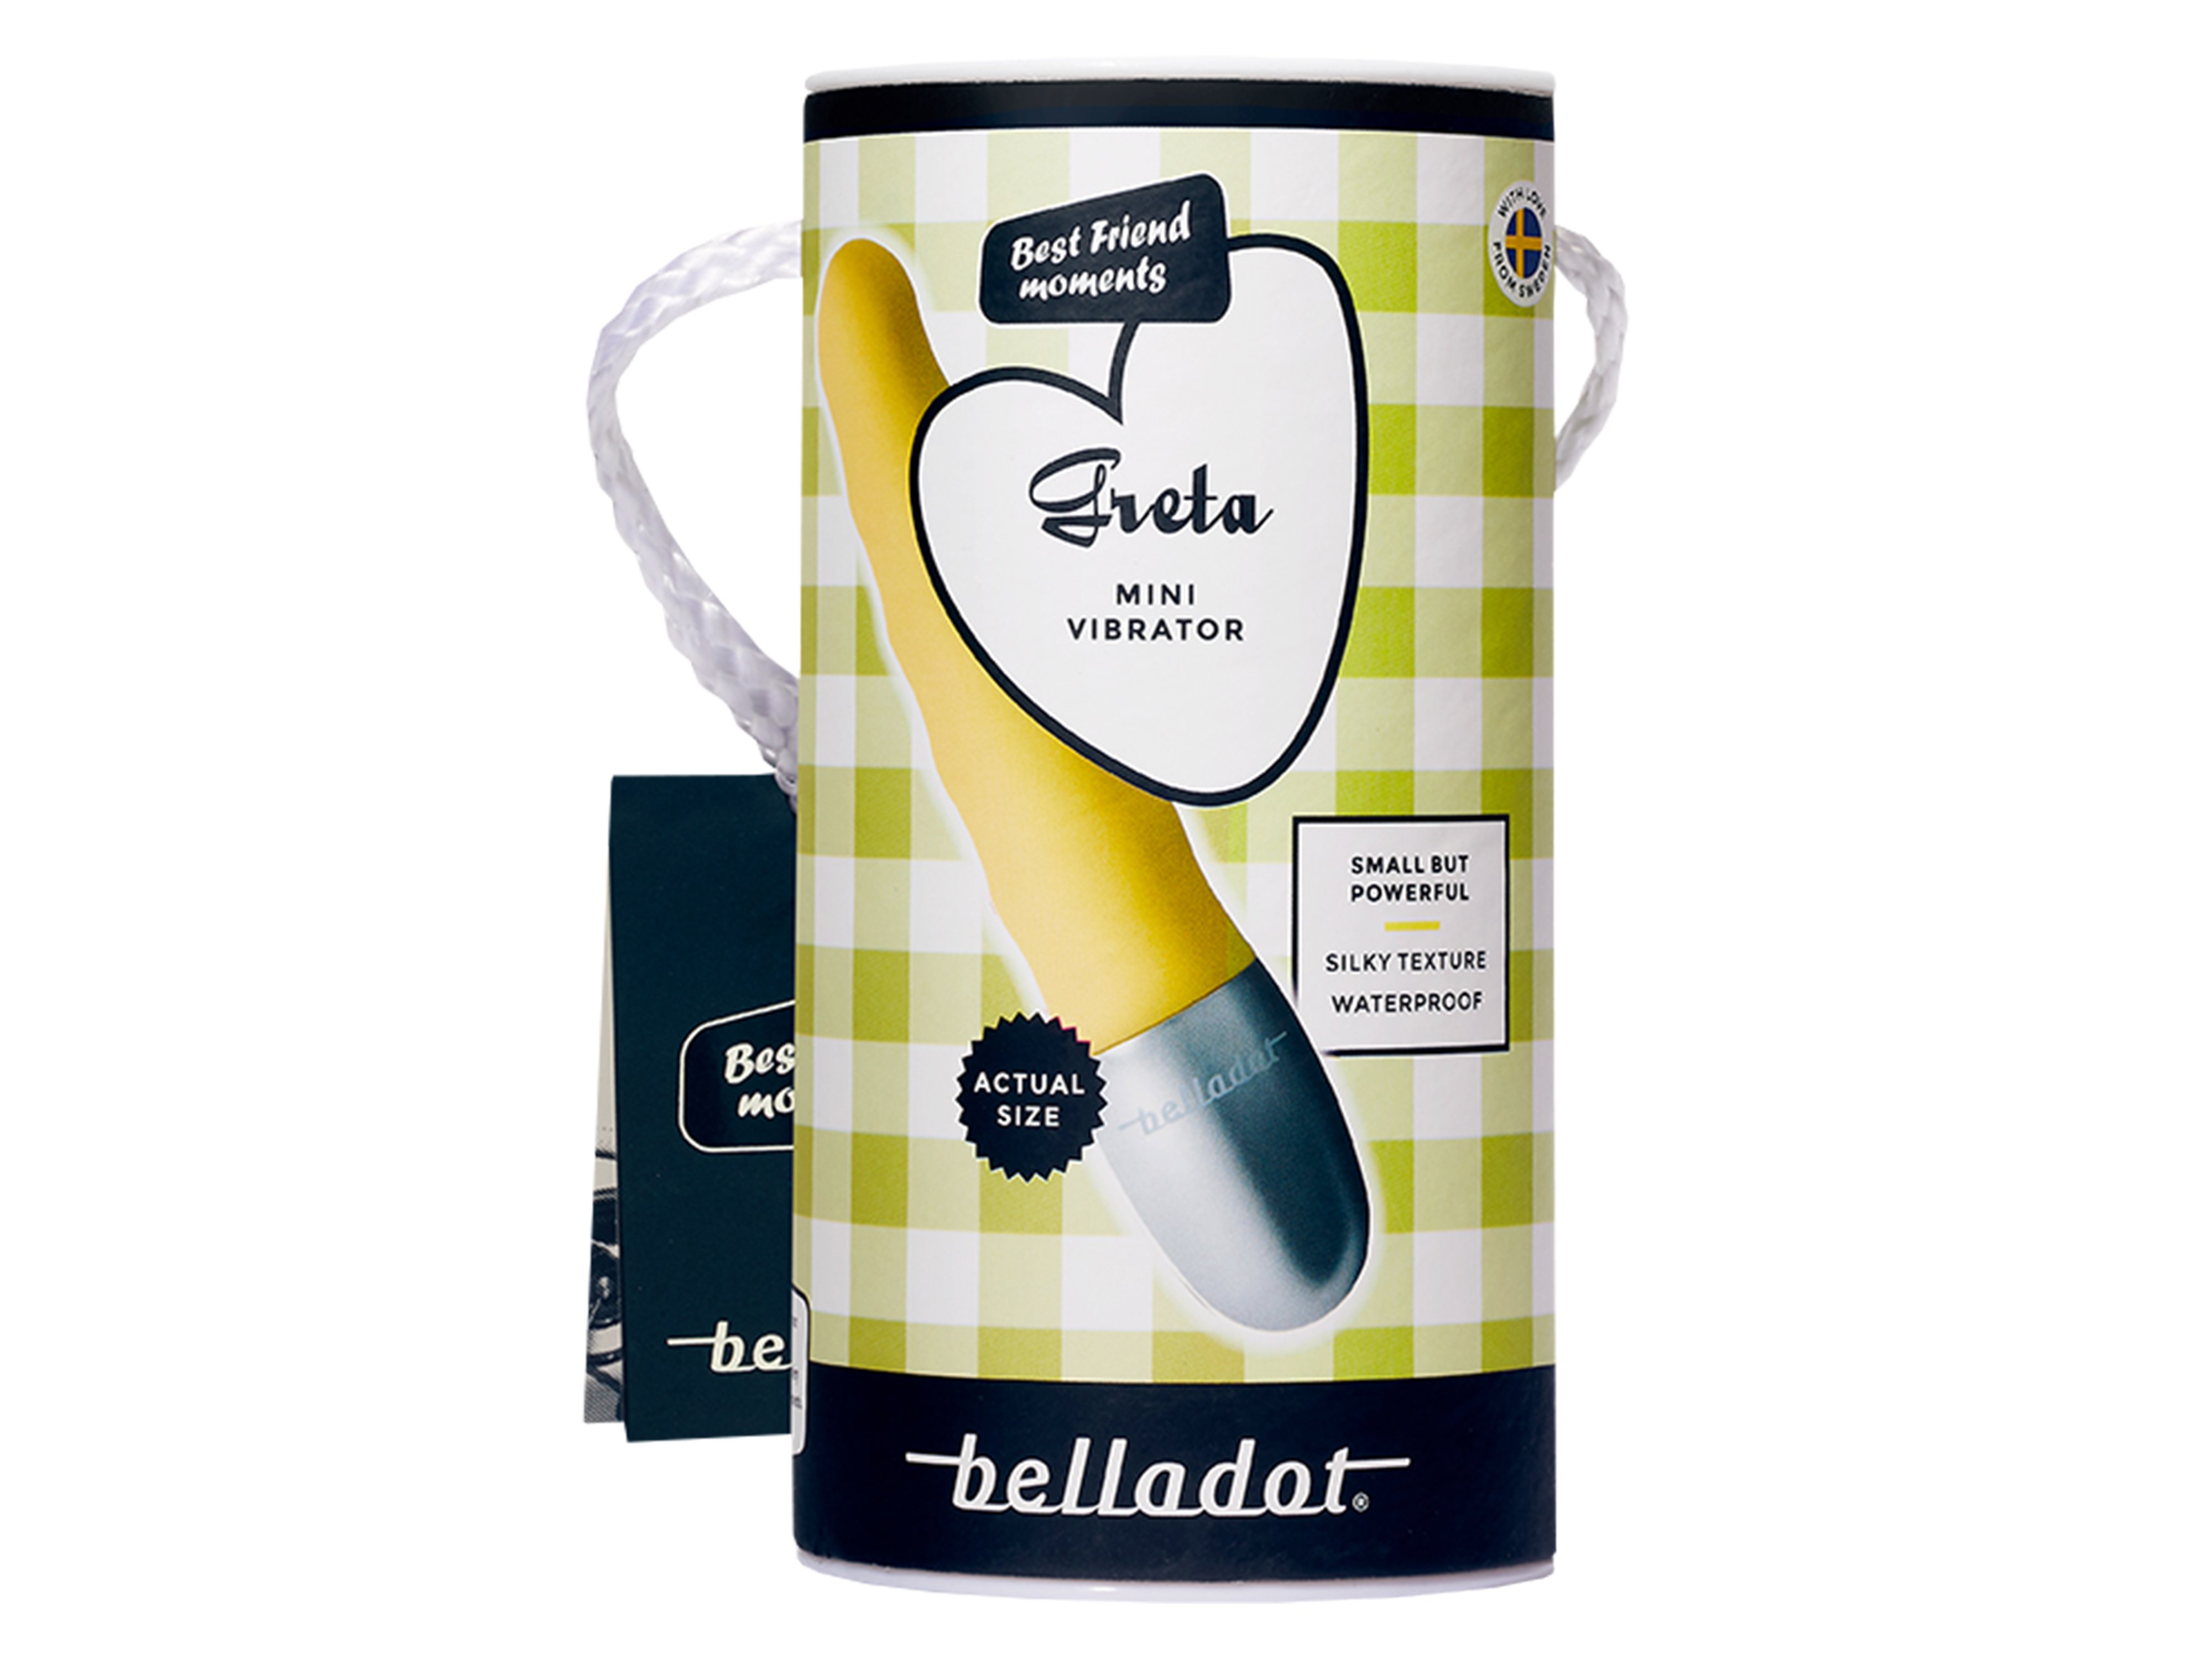 Belladot Greta Mini Vibrator, Gul, 1 stk.